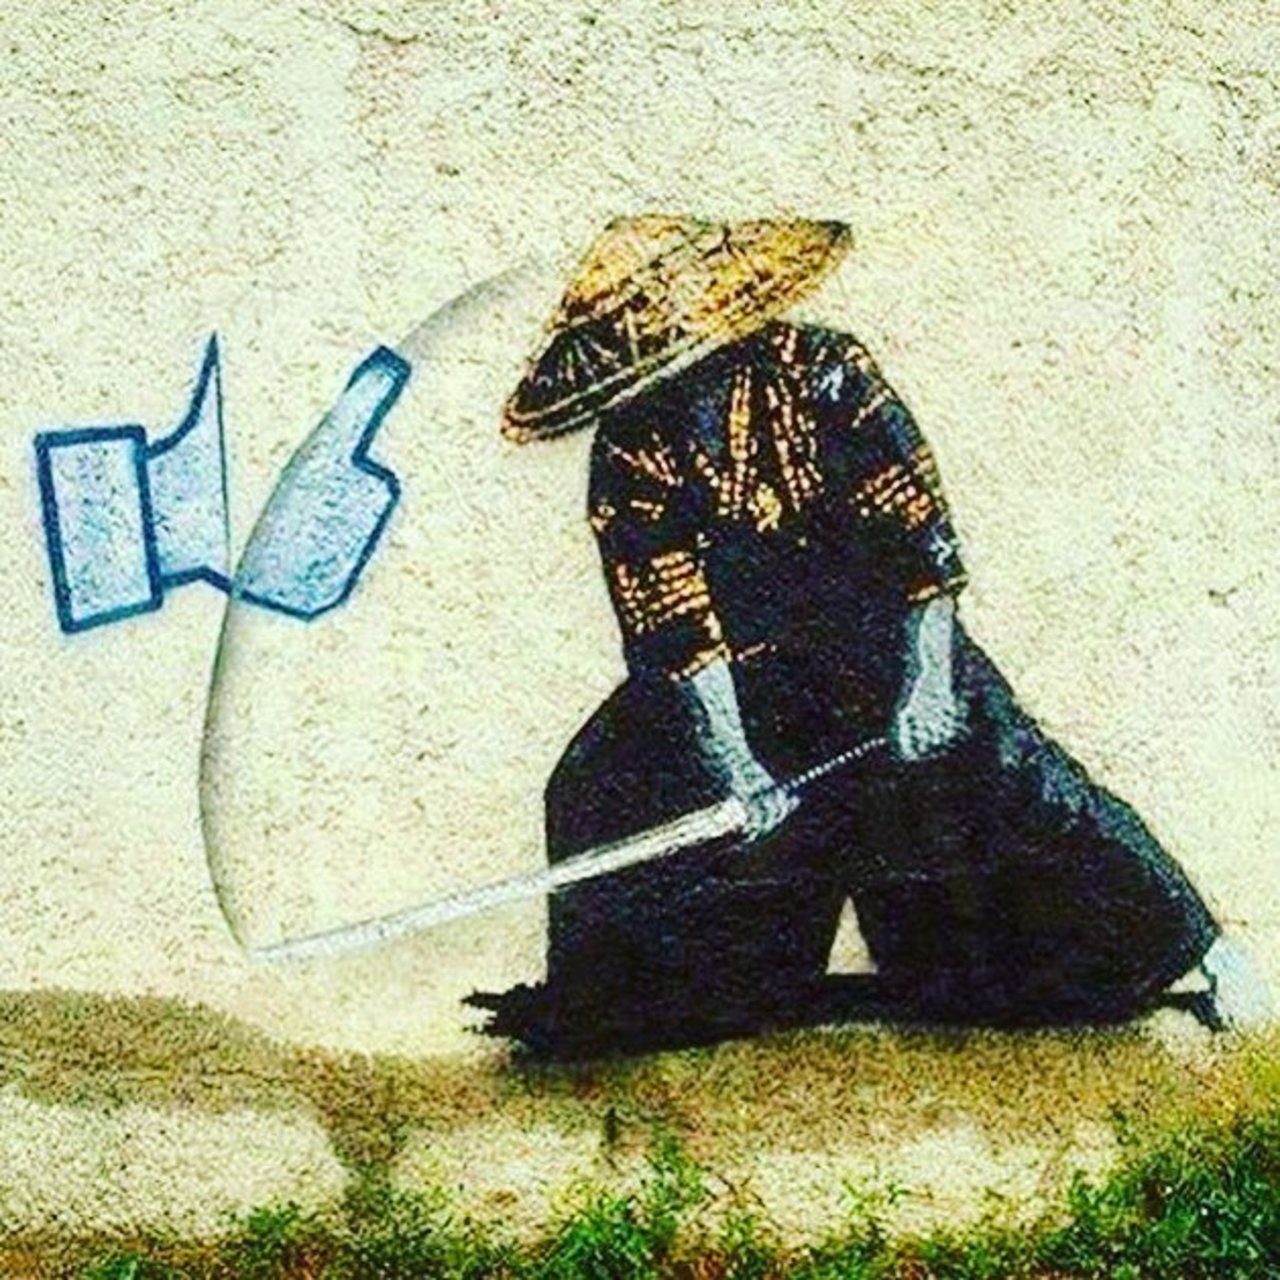 RT @StArtEverywhere: Likes created by @artnafir #artnafir #streetart #art #MrHOLLYWOOD #graffiti #sprayart #Banksy #Artist #MrBrainwas… https://t.co/Y4CR42BOI4